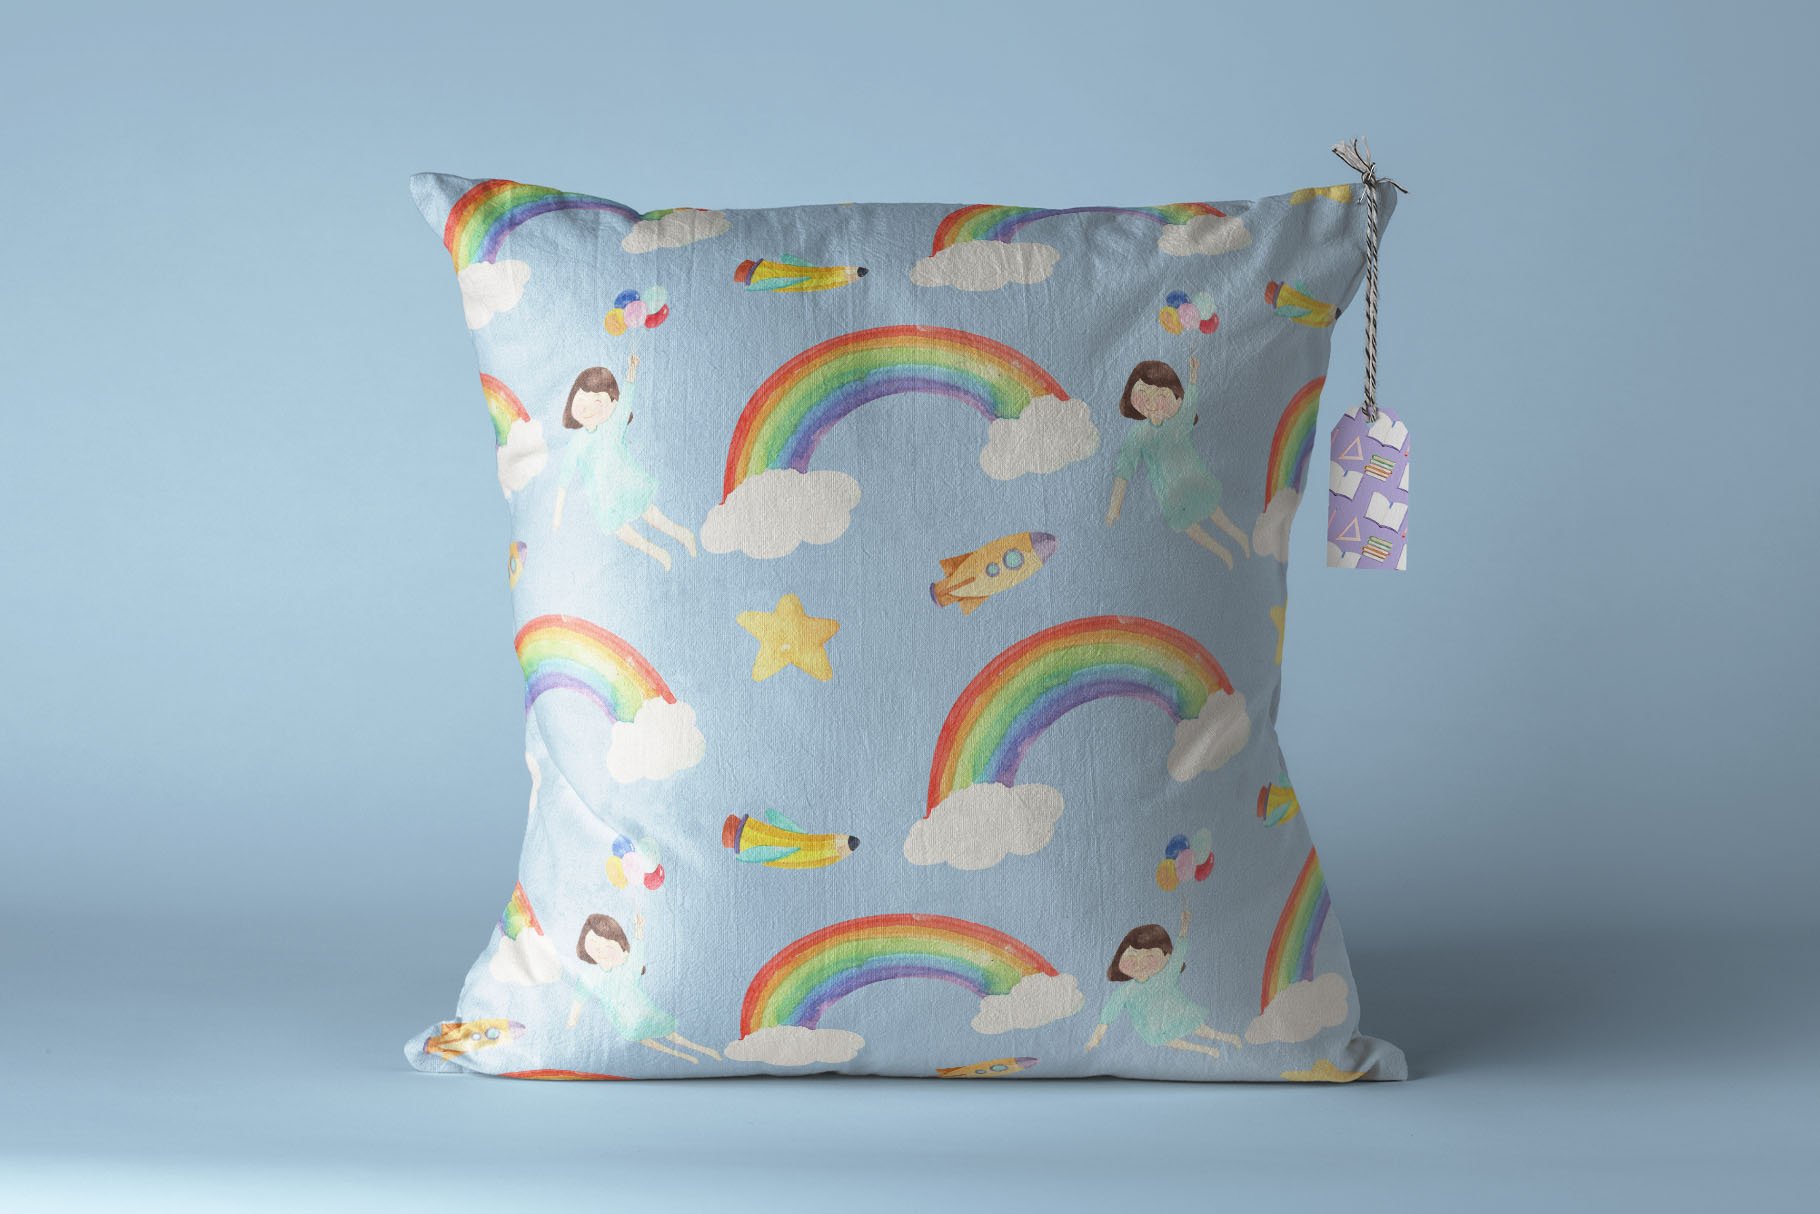 Cute pillow for children rooms.